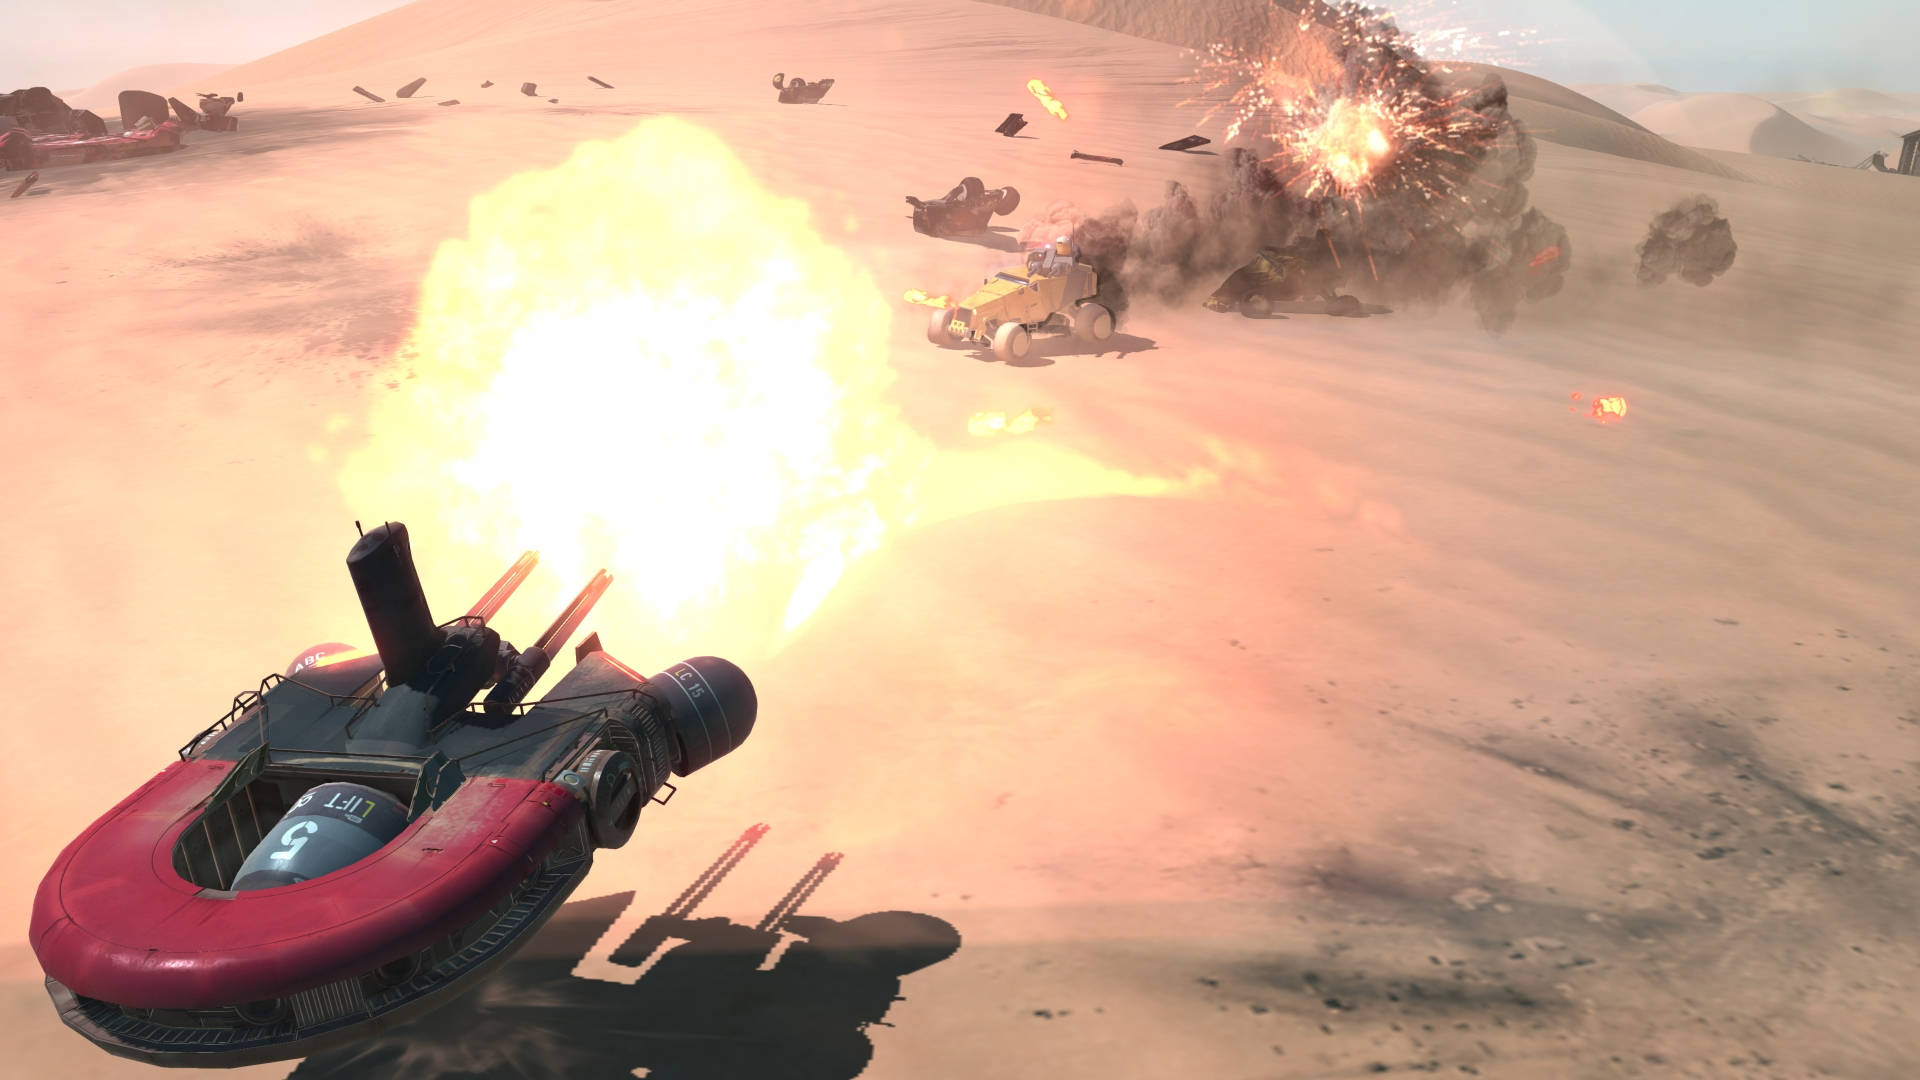 Deserted Desert] Fire Force Online - Roblox